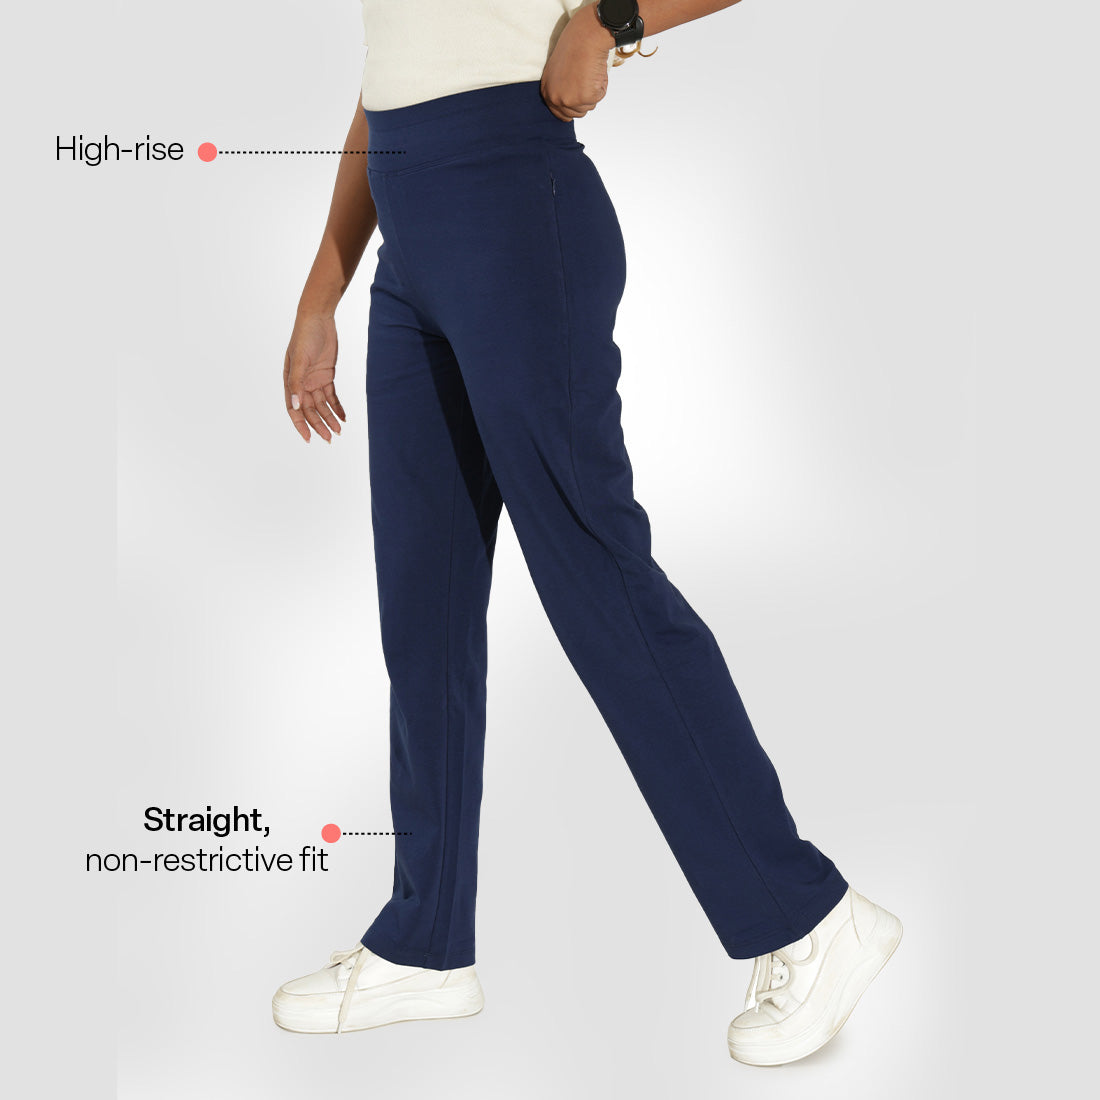 Women's White Cotton Solid Straight Trouser Pant - BLISSART - 3365608